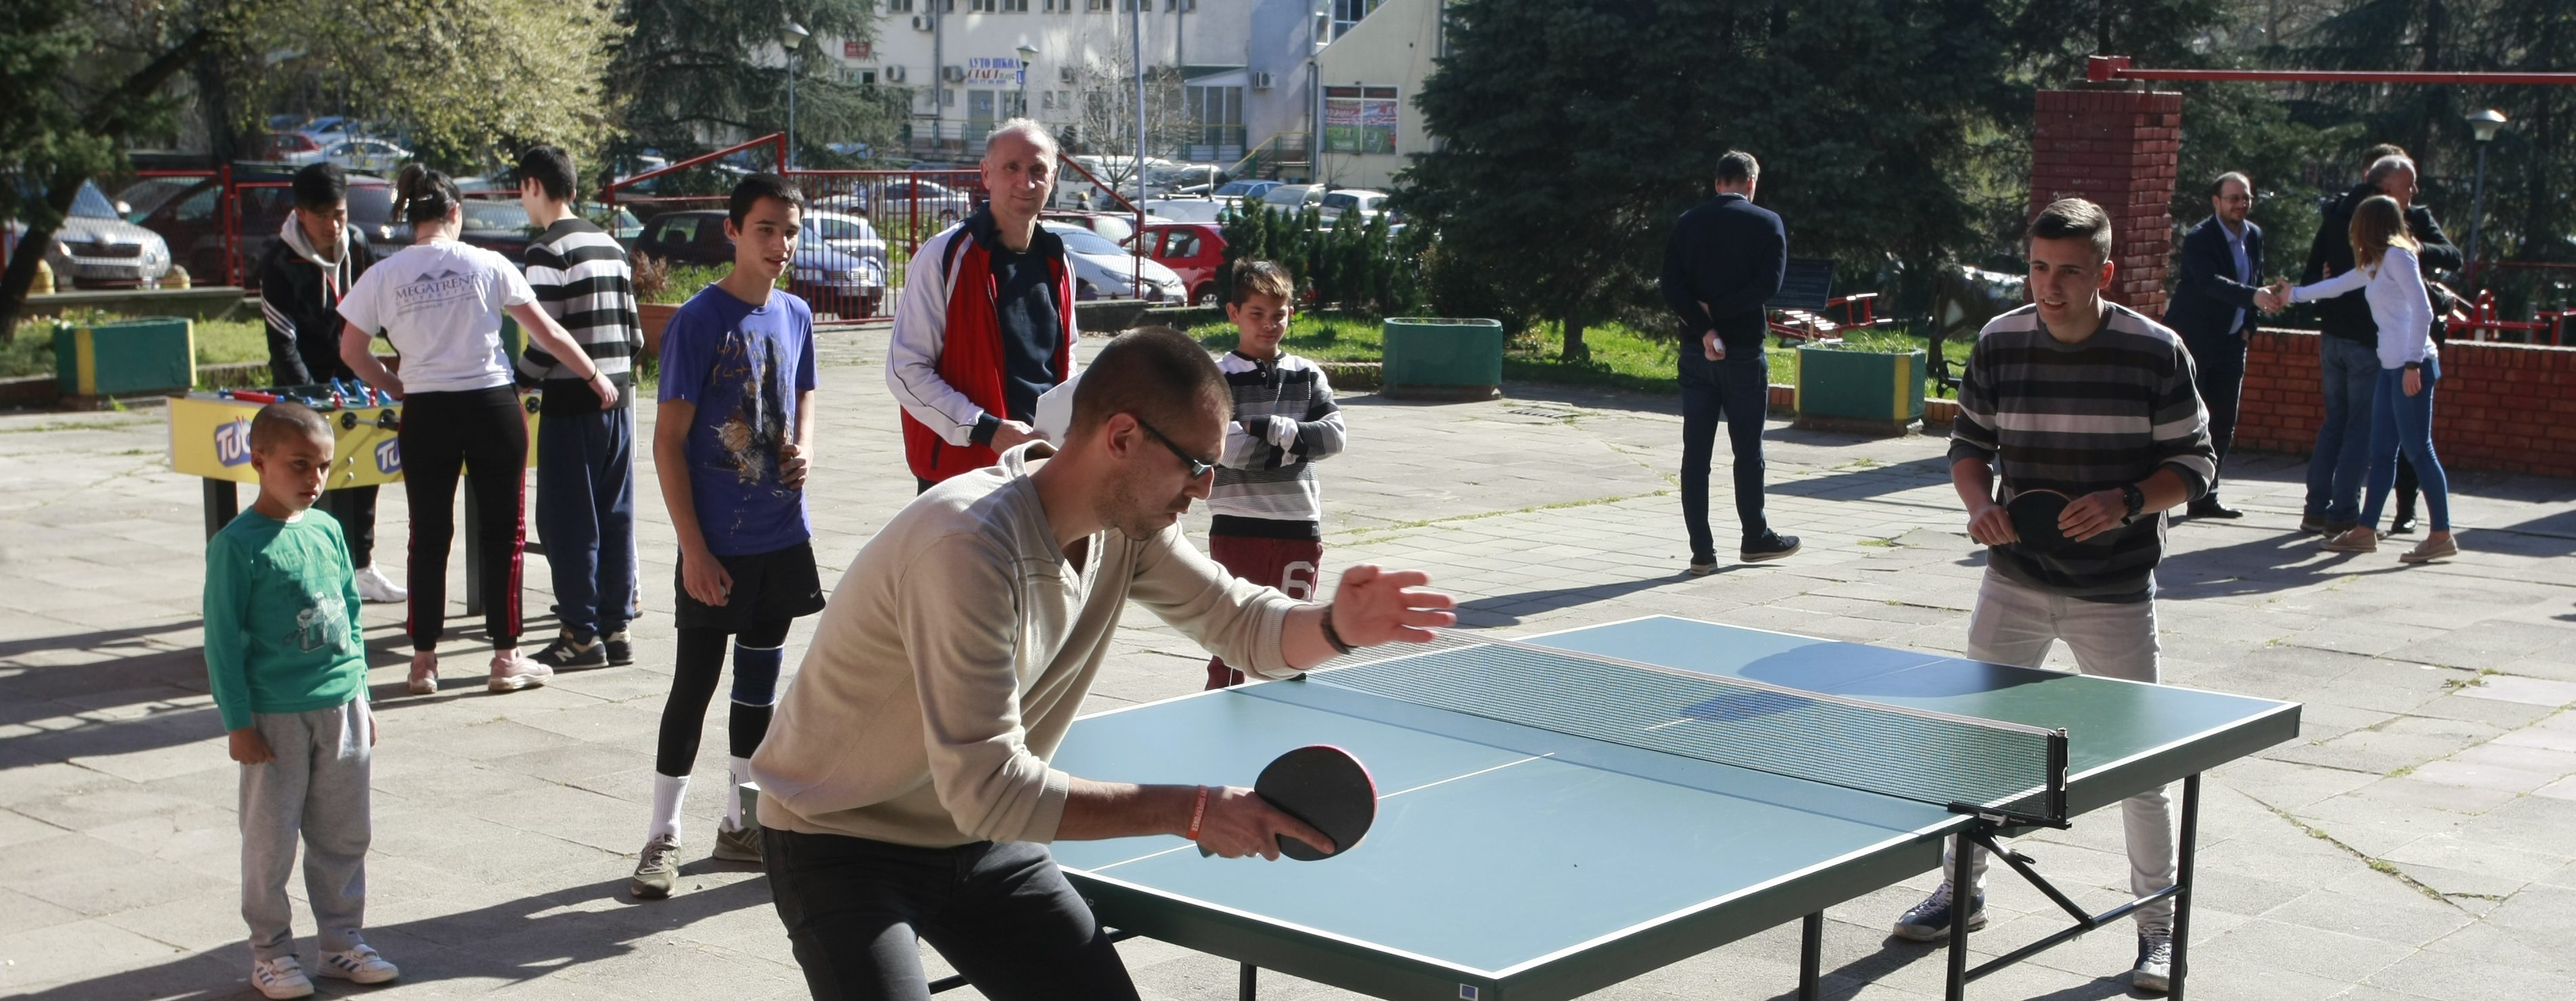 I migranti na teniskom turniru u Domu “Jovan Jovanović Zmaj” u Beogradu